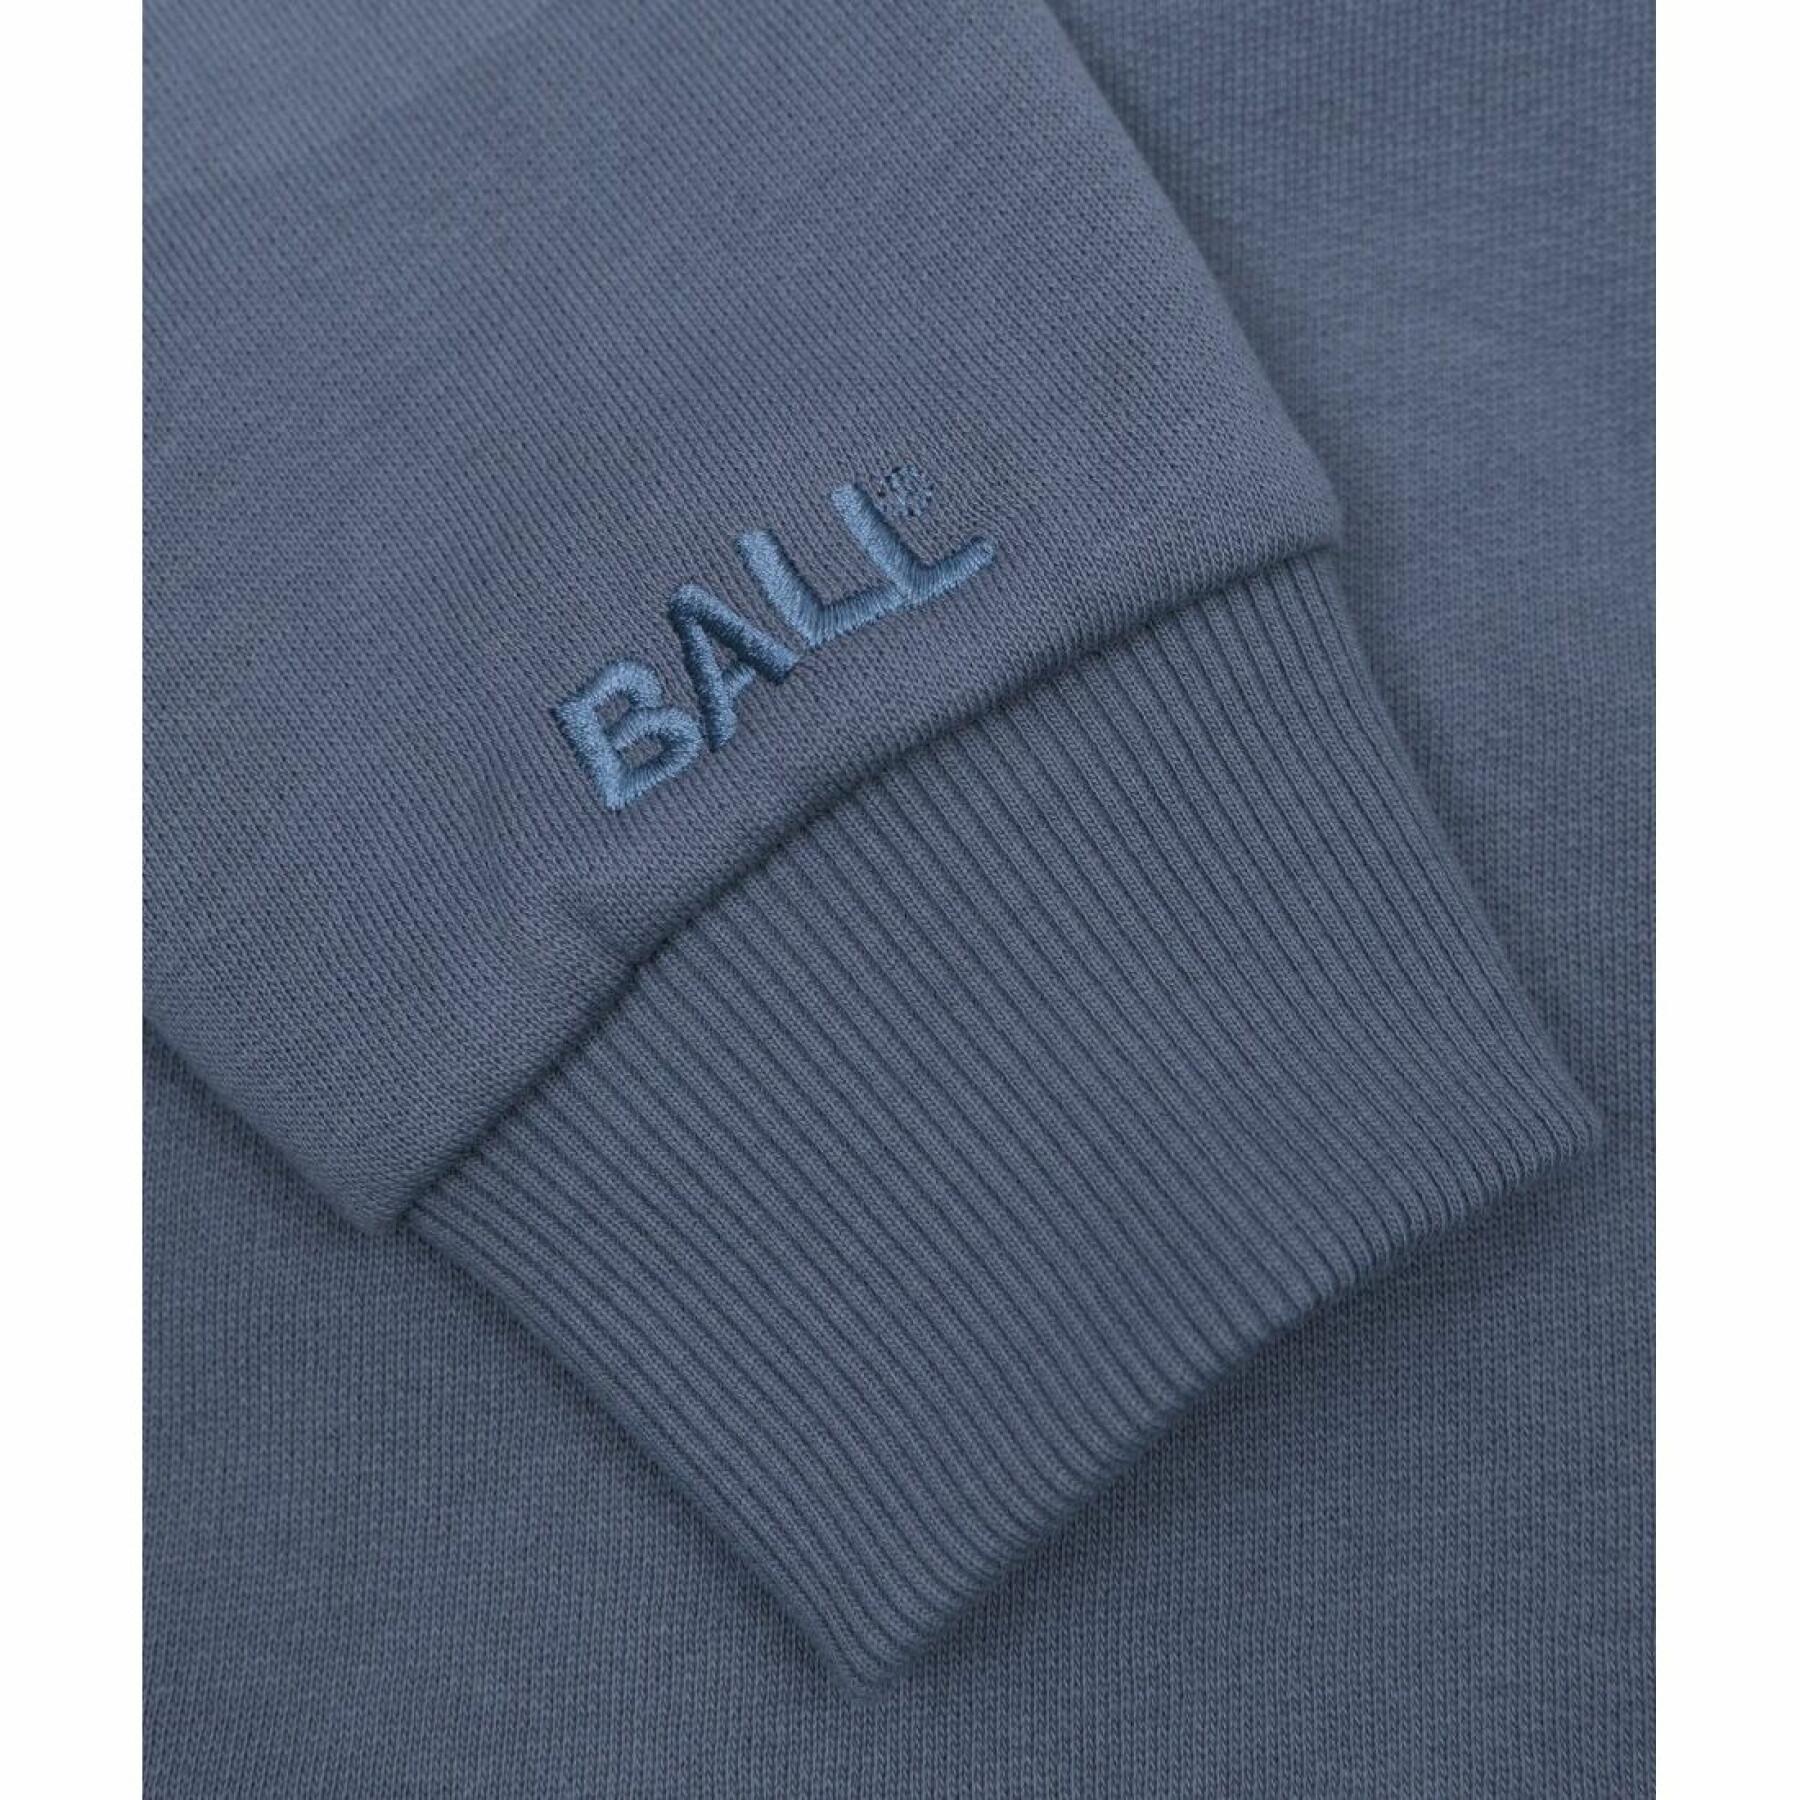 Bluza Ball L. Taylor